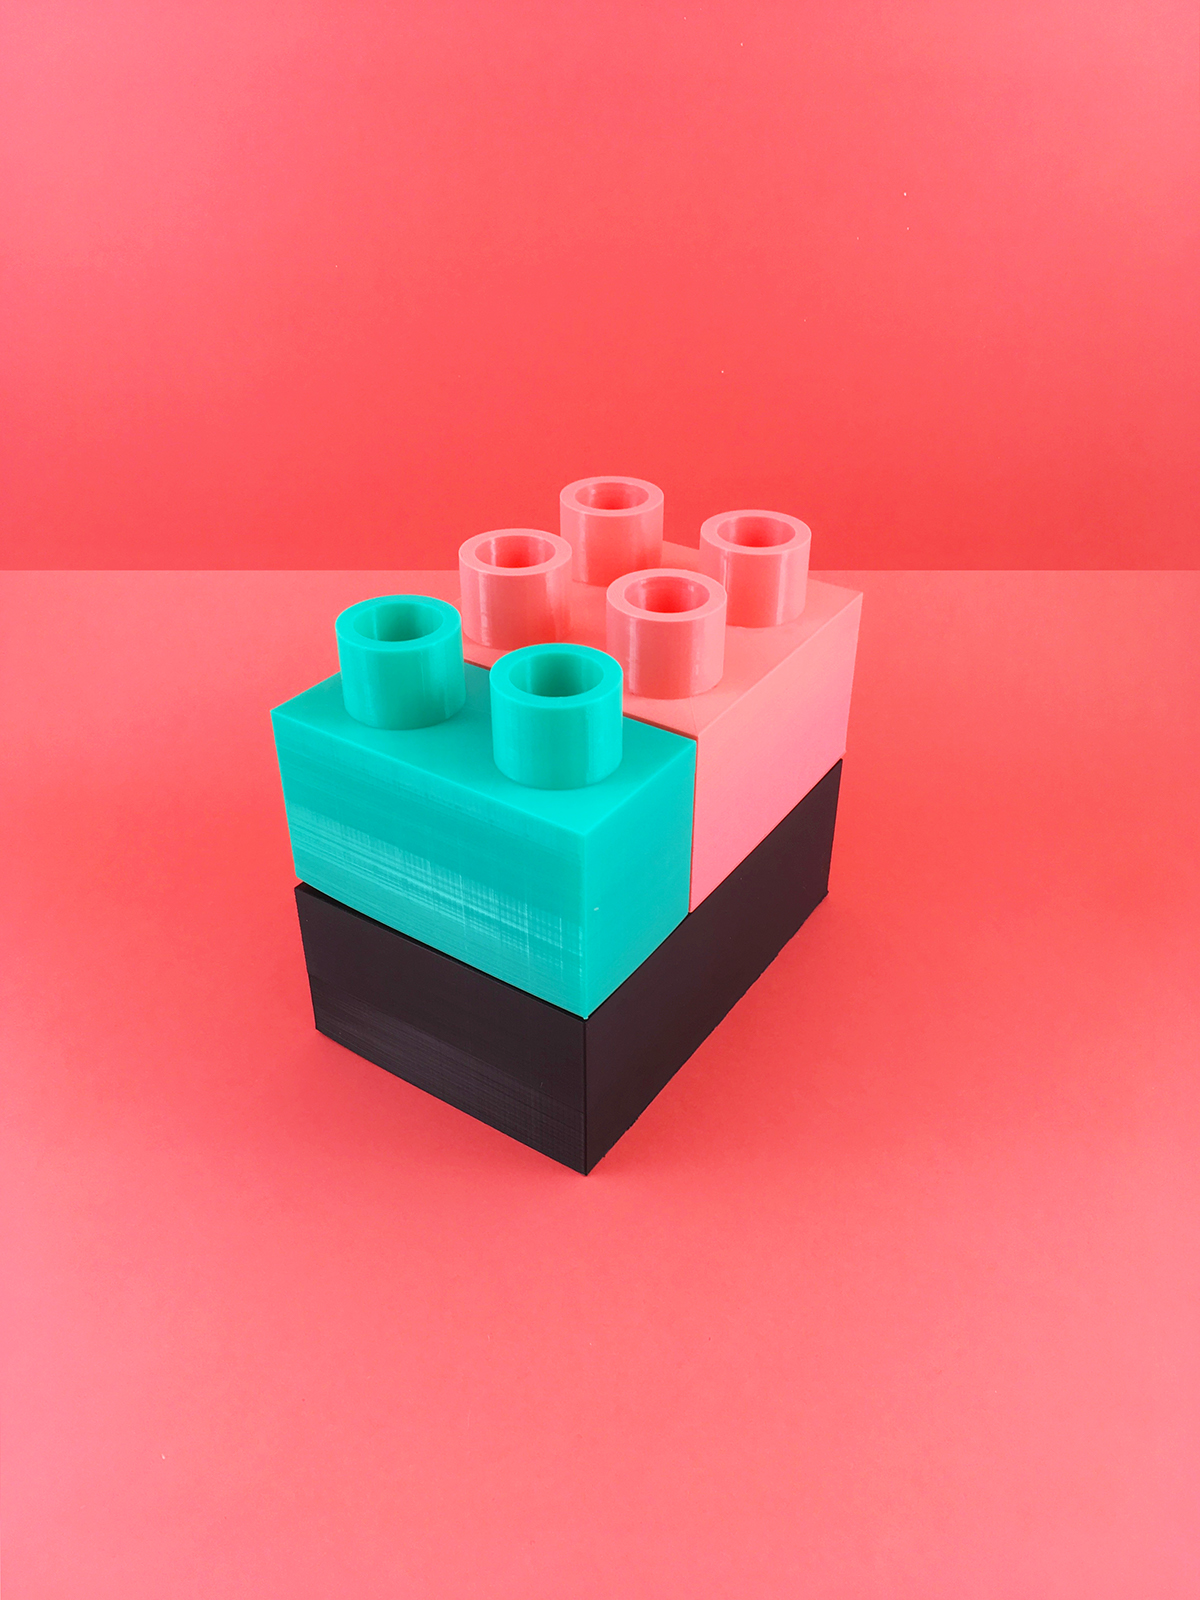 LEGO candleholder Candleholders product product design  3d printed industrial design  home decor PLA bioplastic